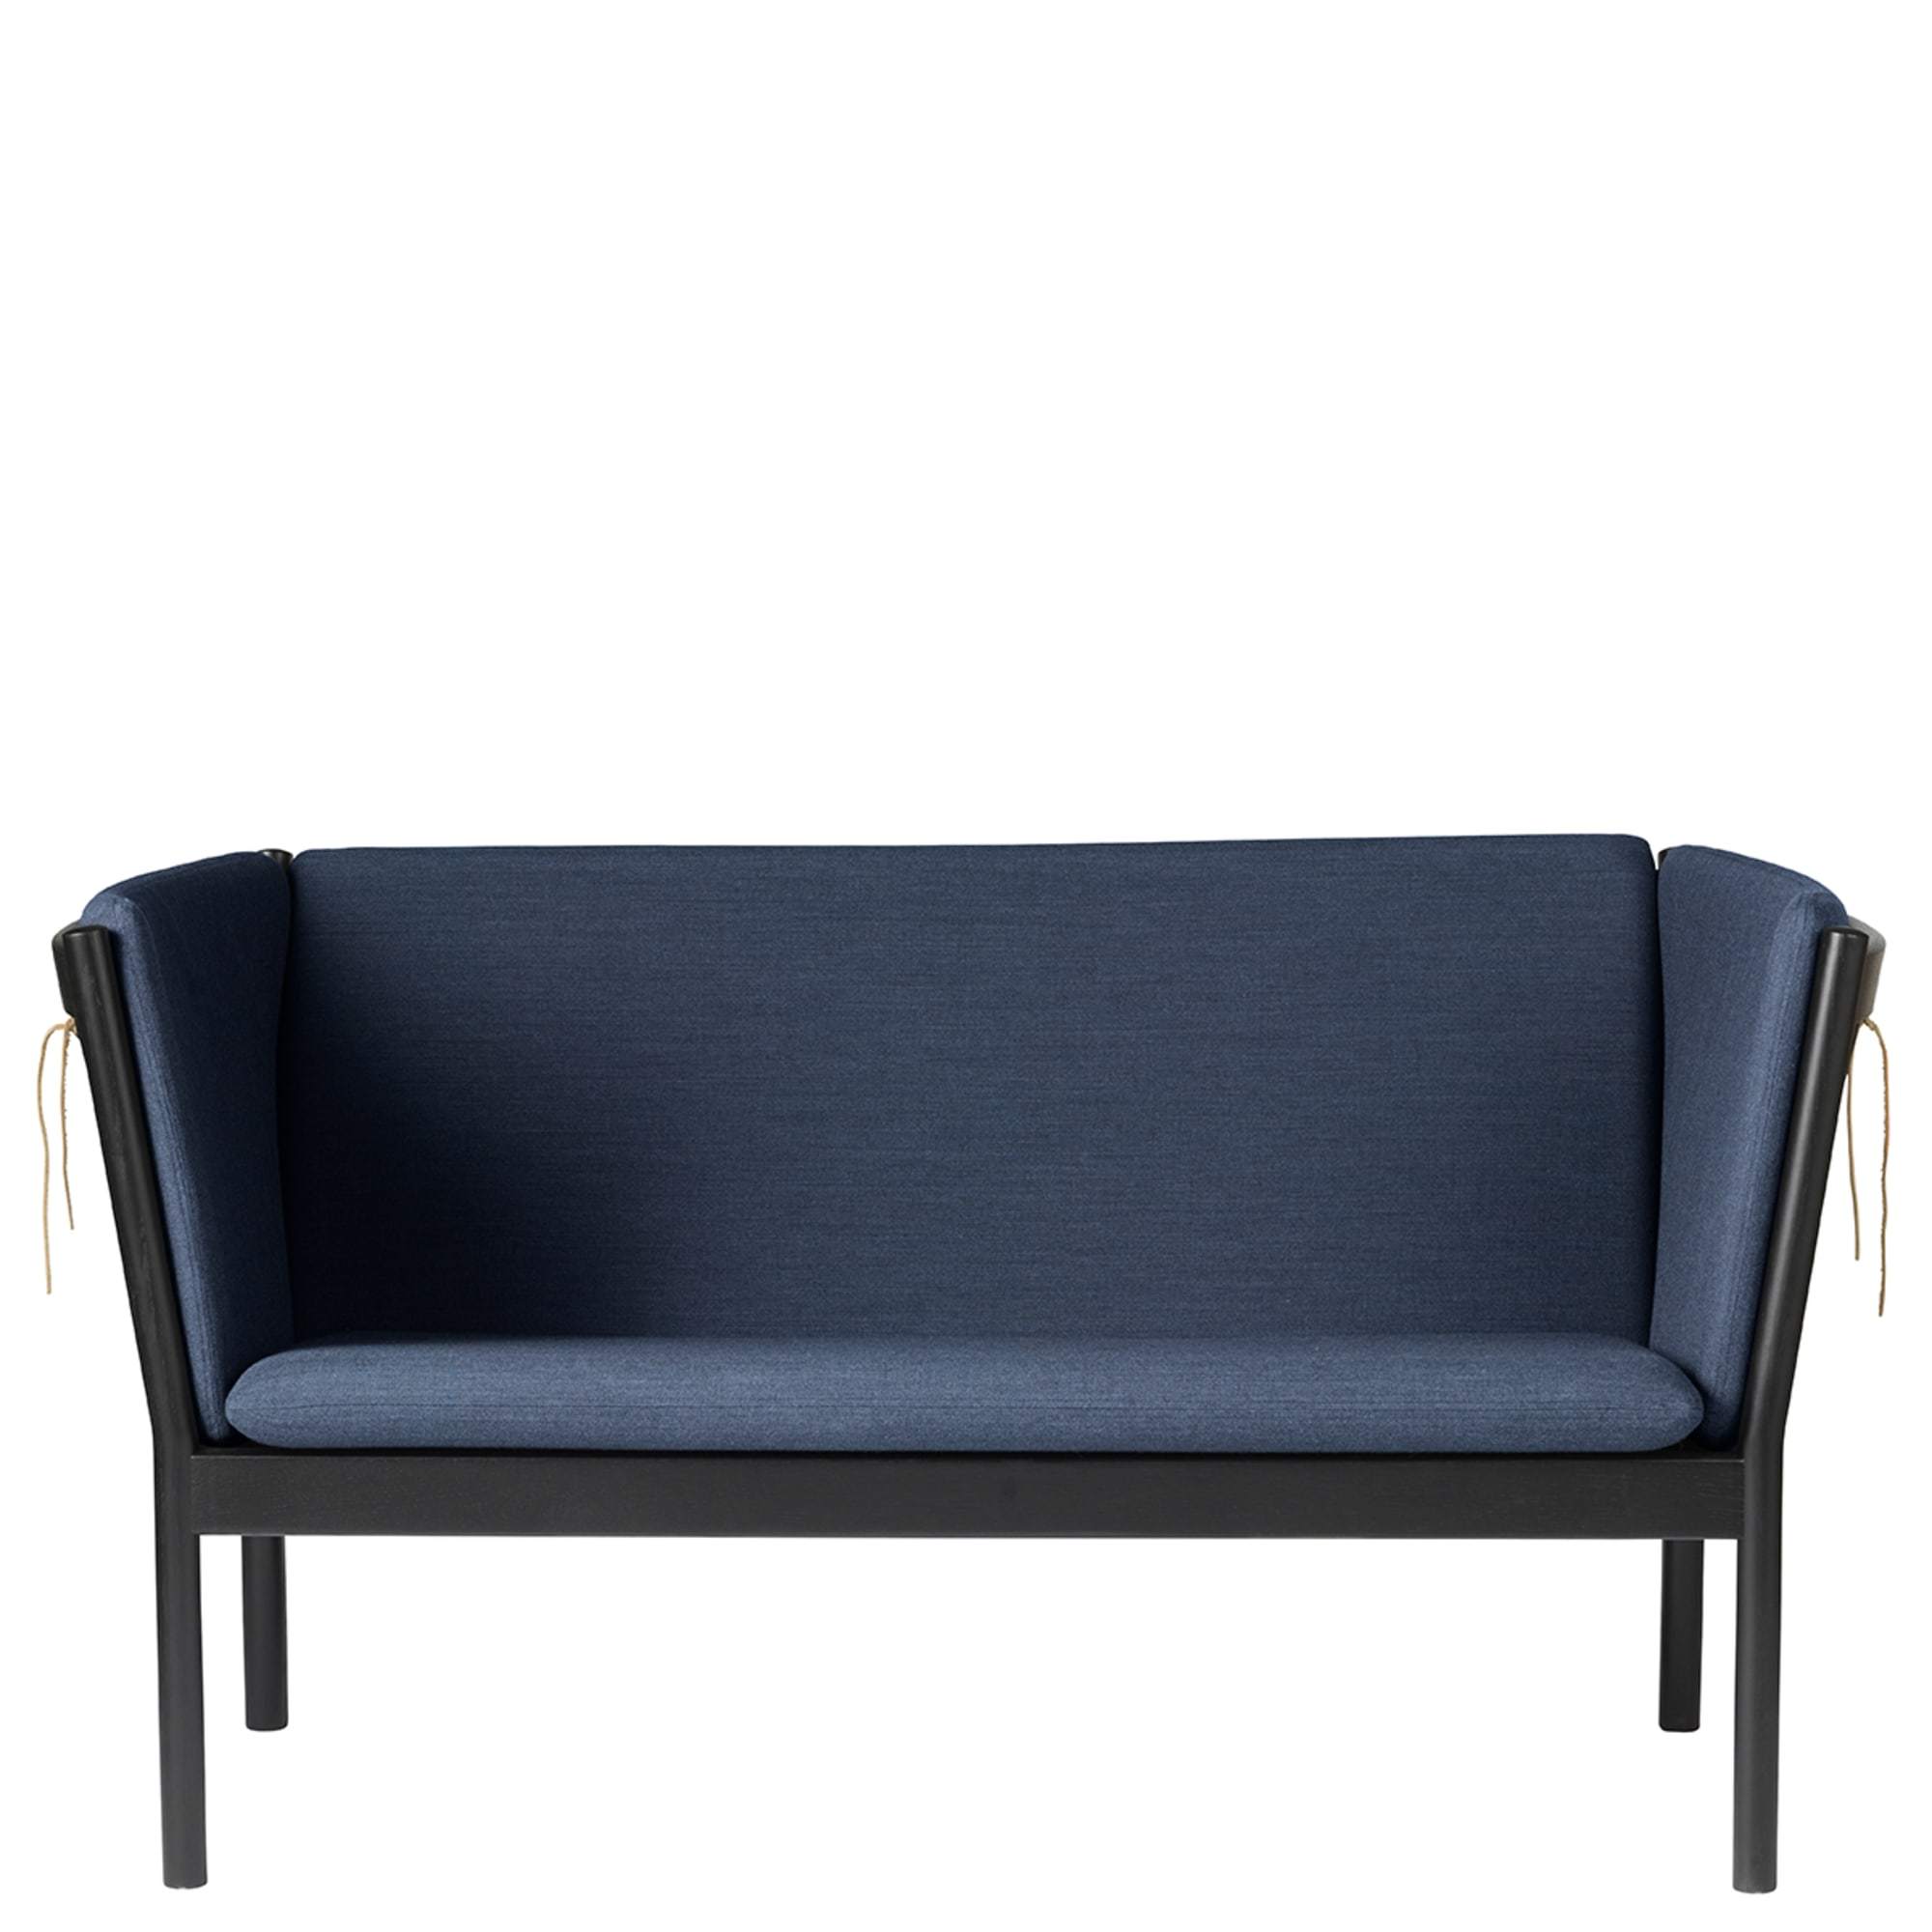 FDB Møbler J148 divano a 2 persone, quercia nera, tessuto blu scuro